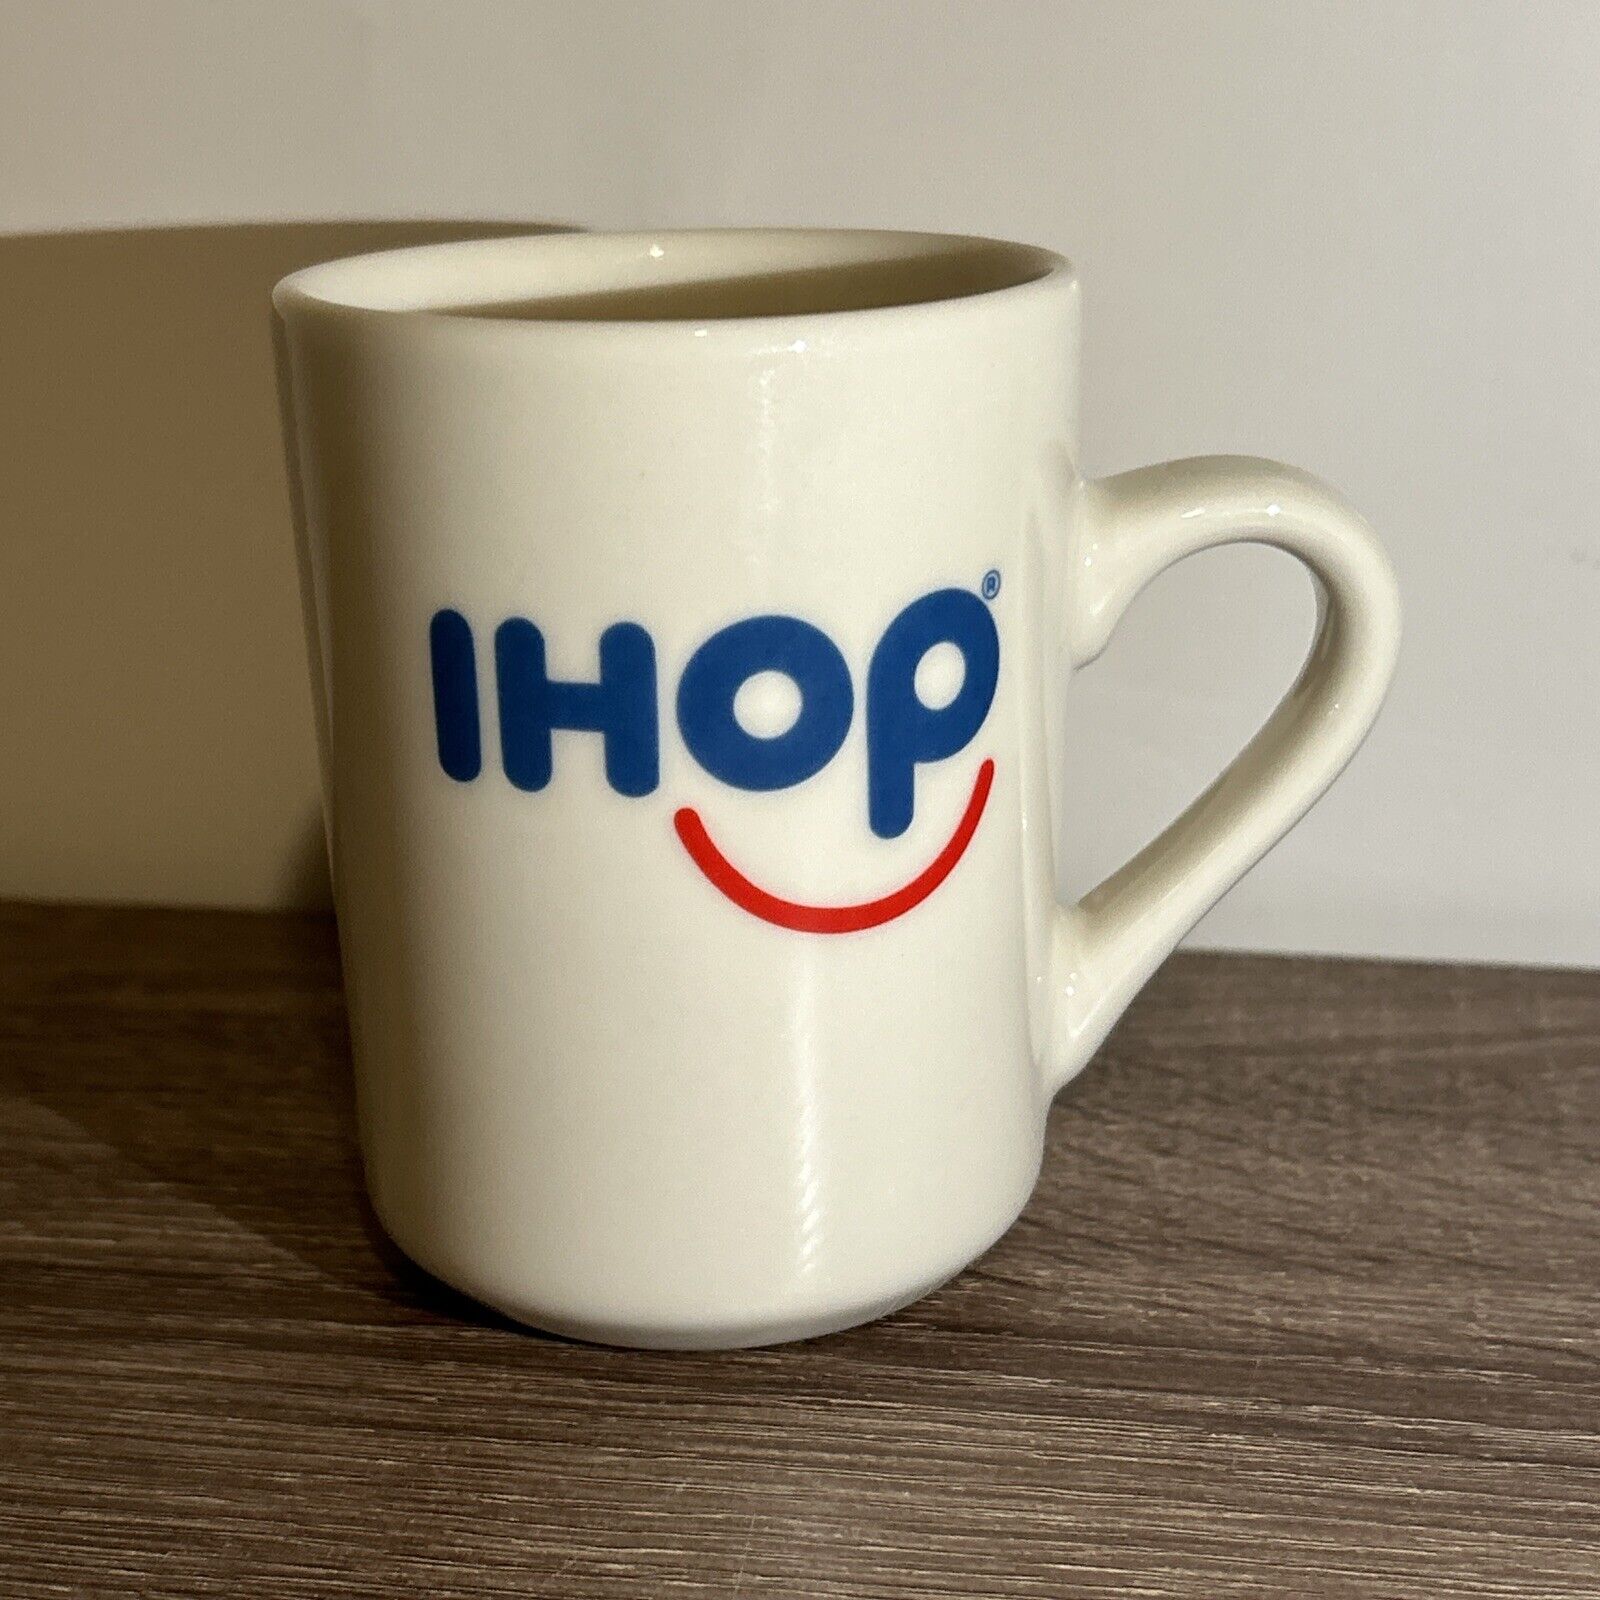 IHOP House of Pancakes Smiling Diner Coffee Mug Cup Tuxton 8 oz Capacity 